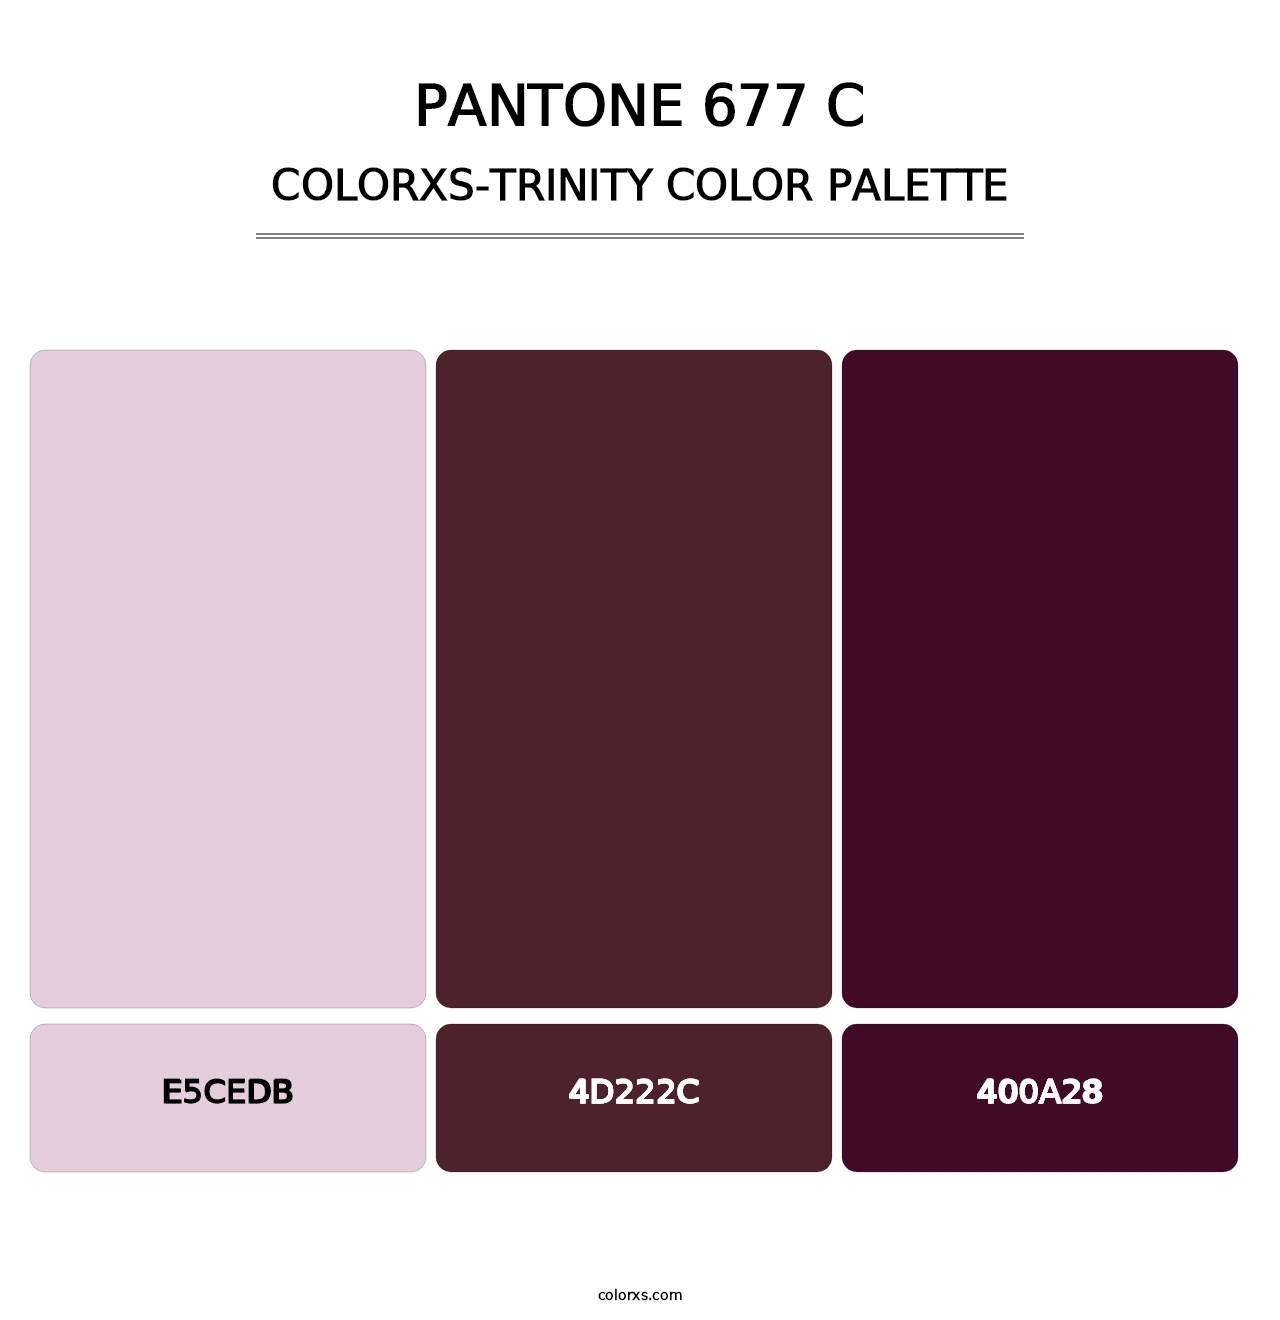 PANTONE 677 C - Colorxs Trinity Palette